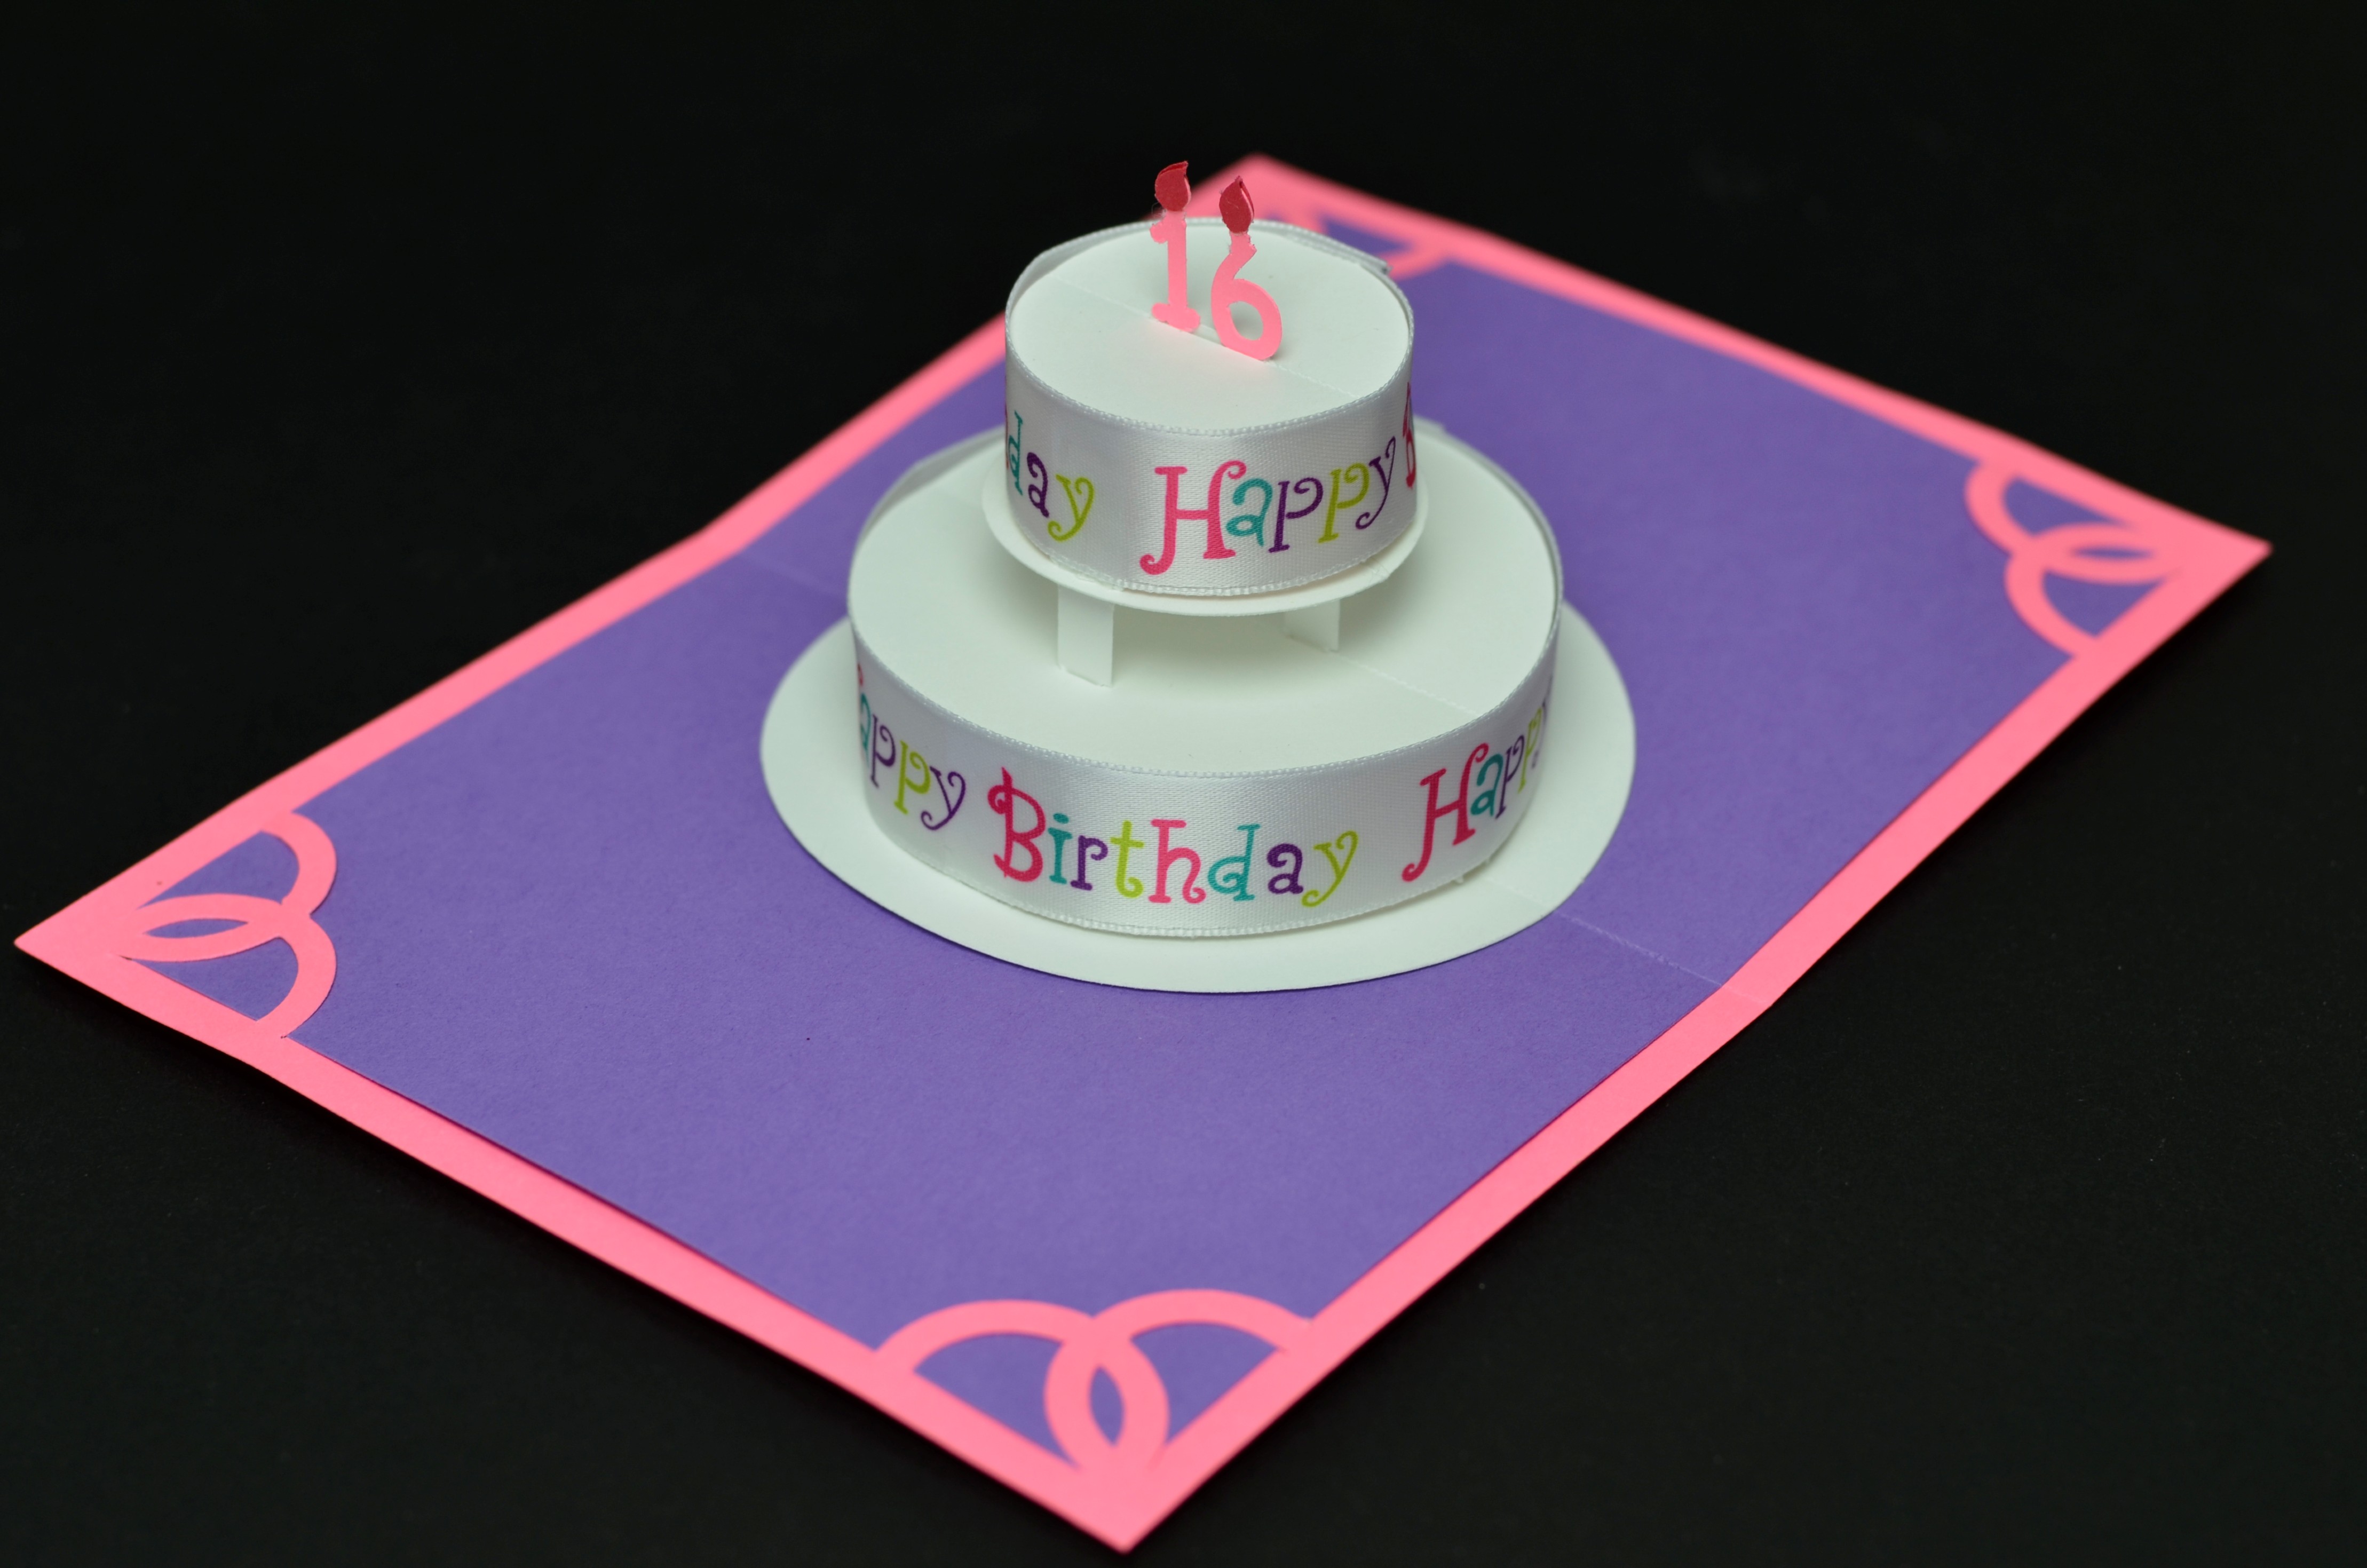 Round Birthday Cake Pop Up Card With "Happy Birthday" Ribbon - Creative Pop Up Cards